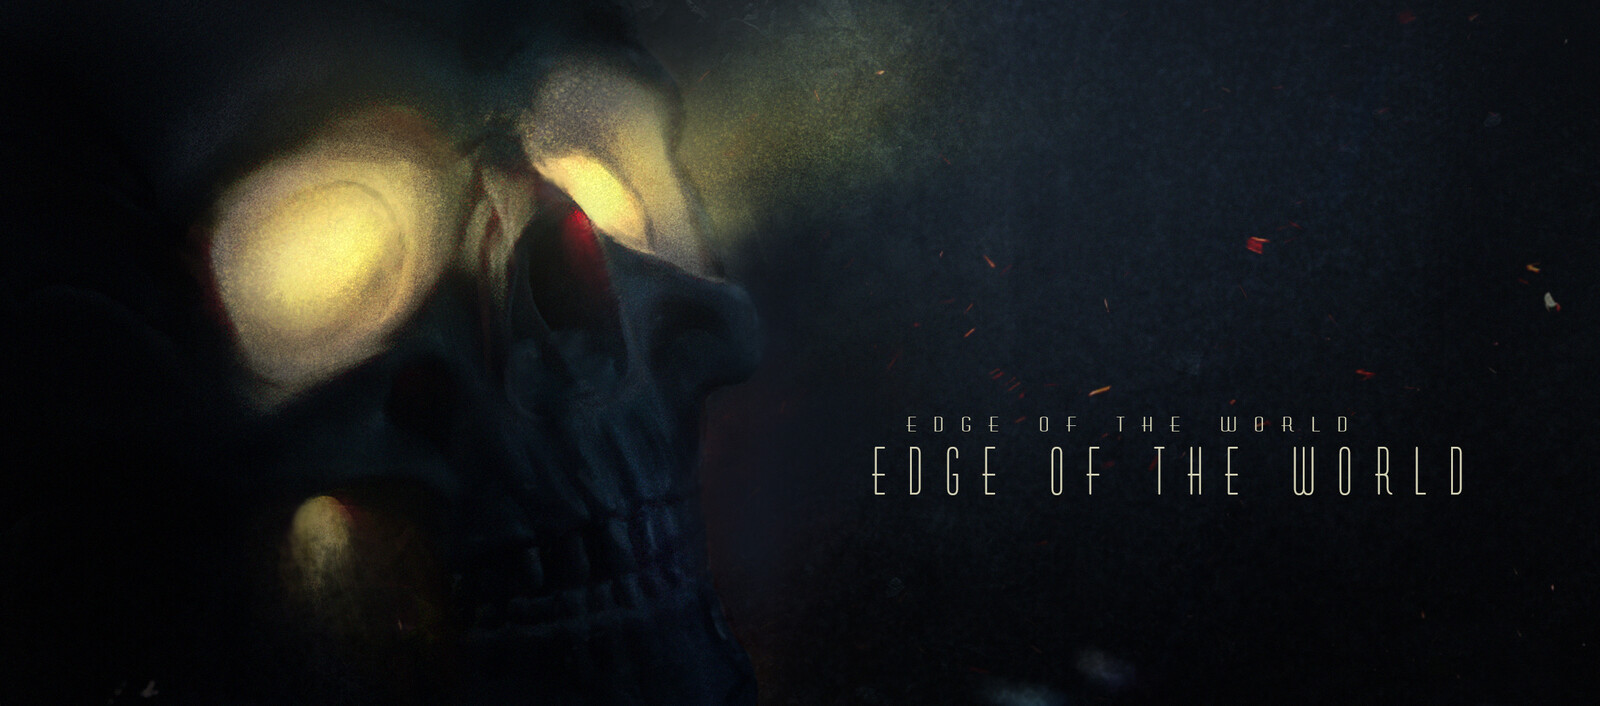 Edge of the world